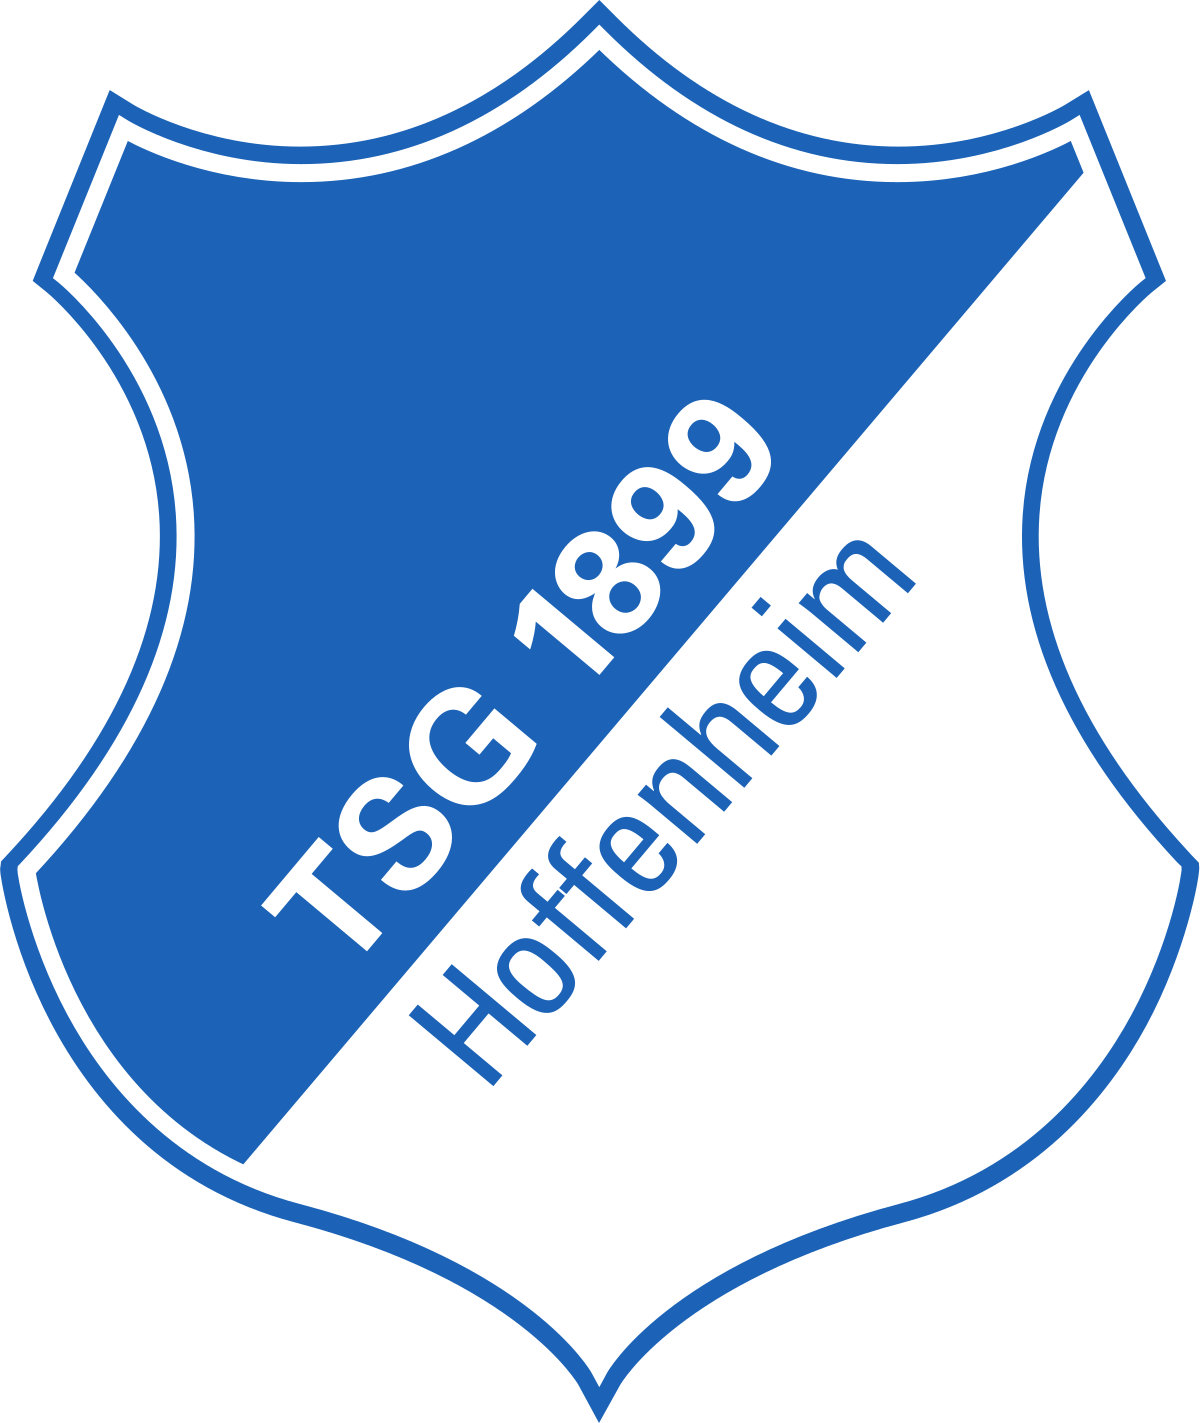 Hoffenheim Logo - TSG 1899 Hoffenheim